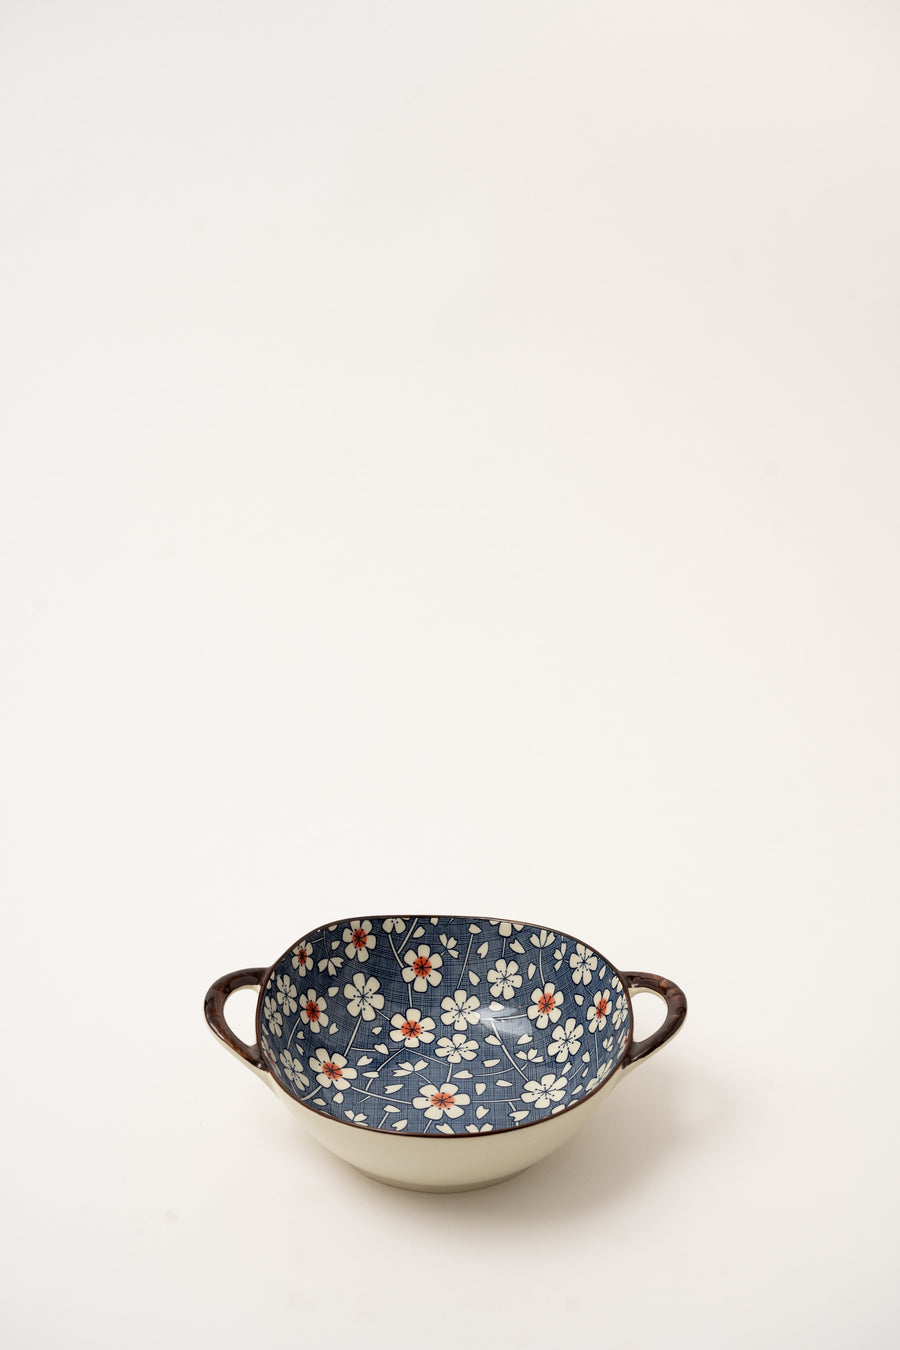 Handled Art Bowl - Blue